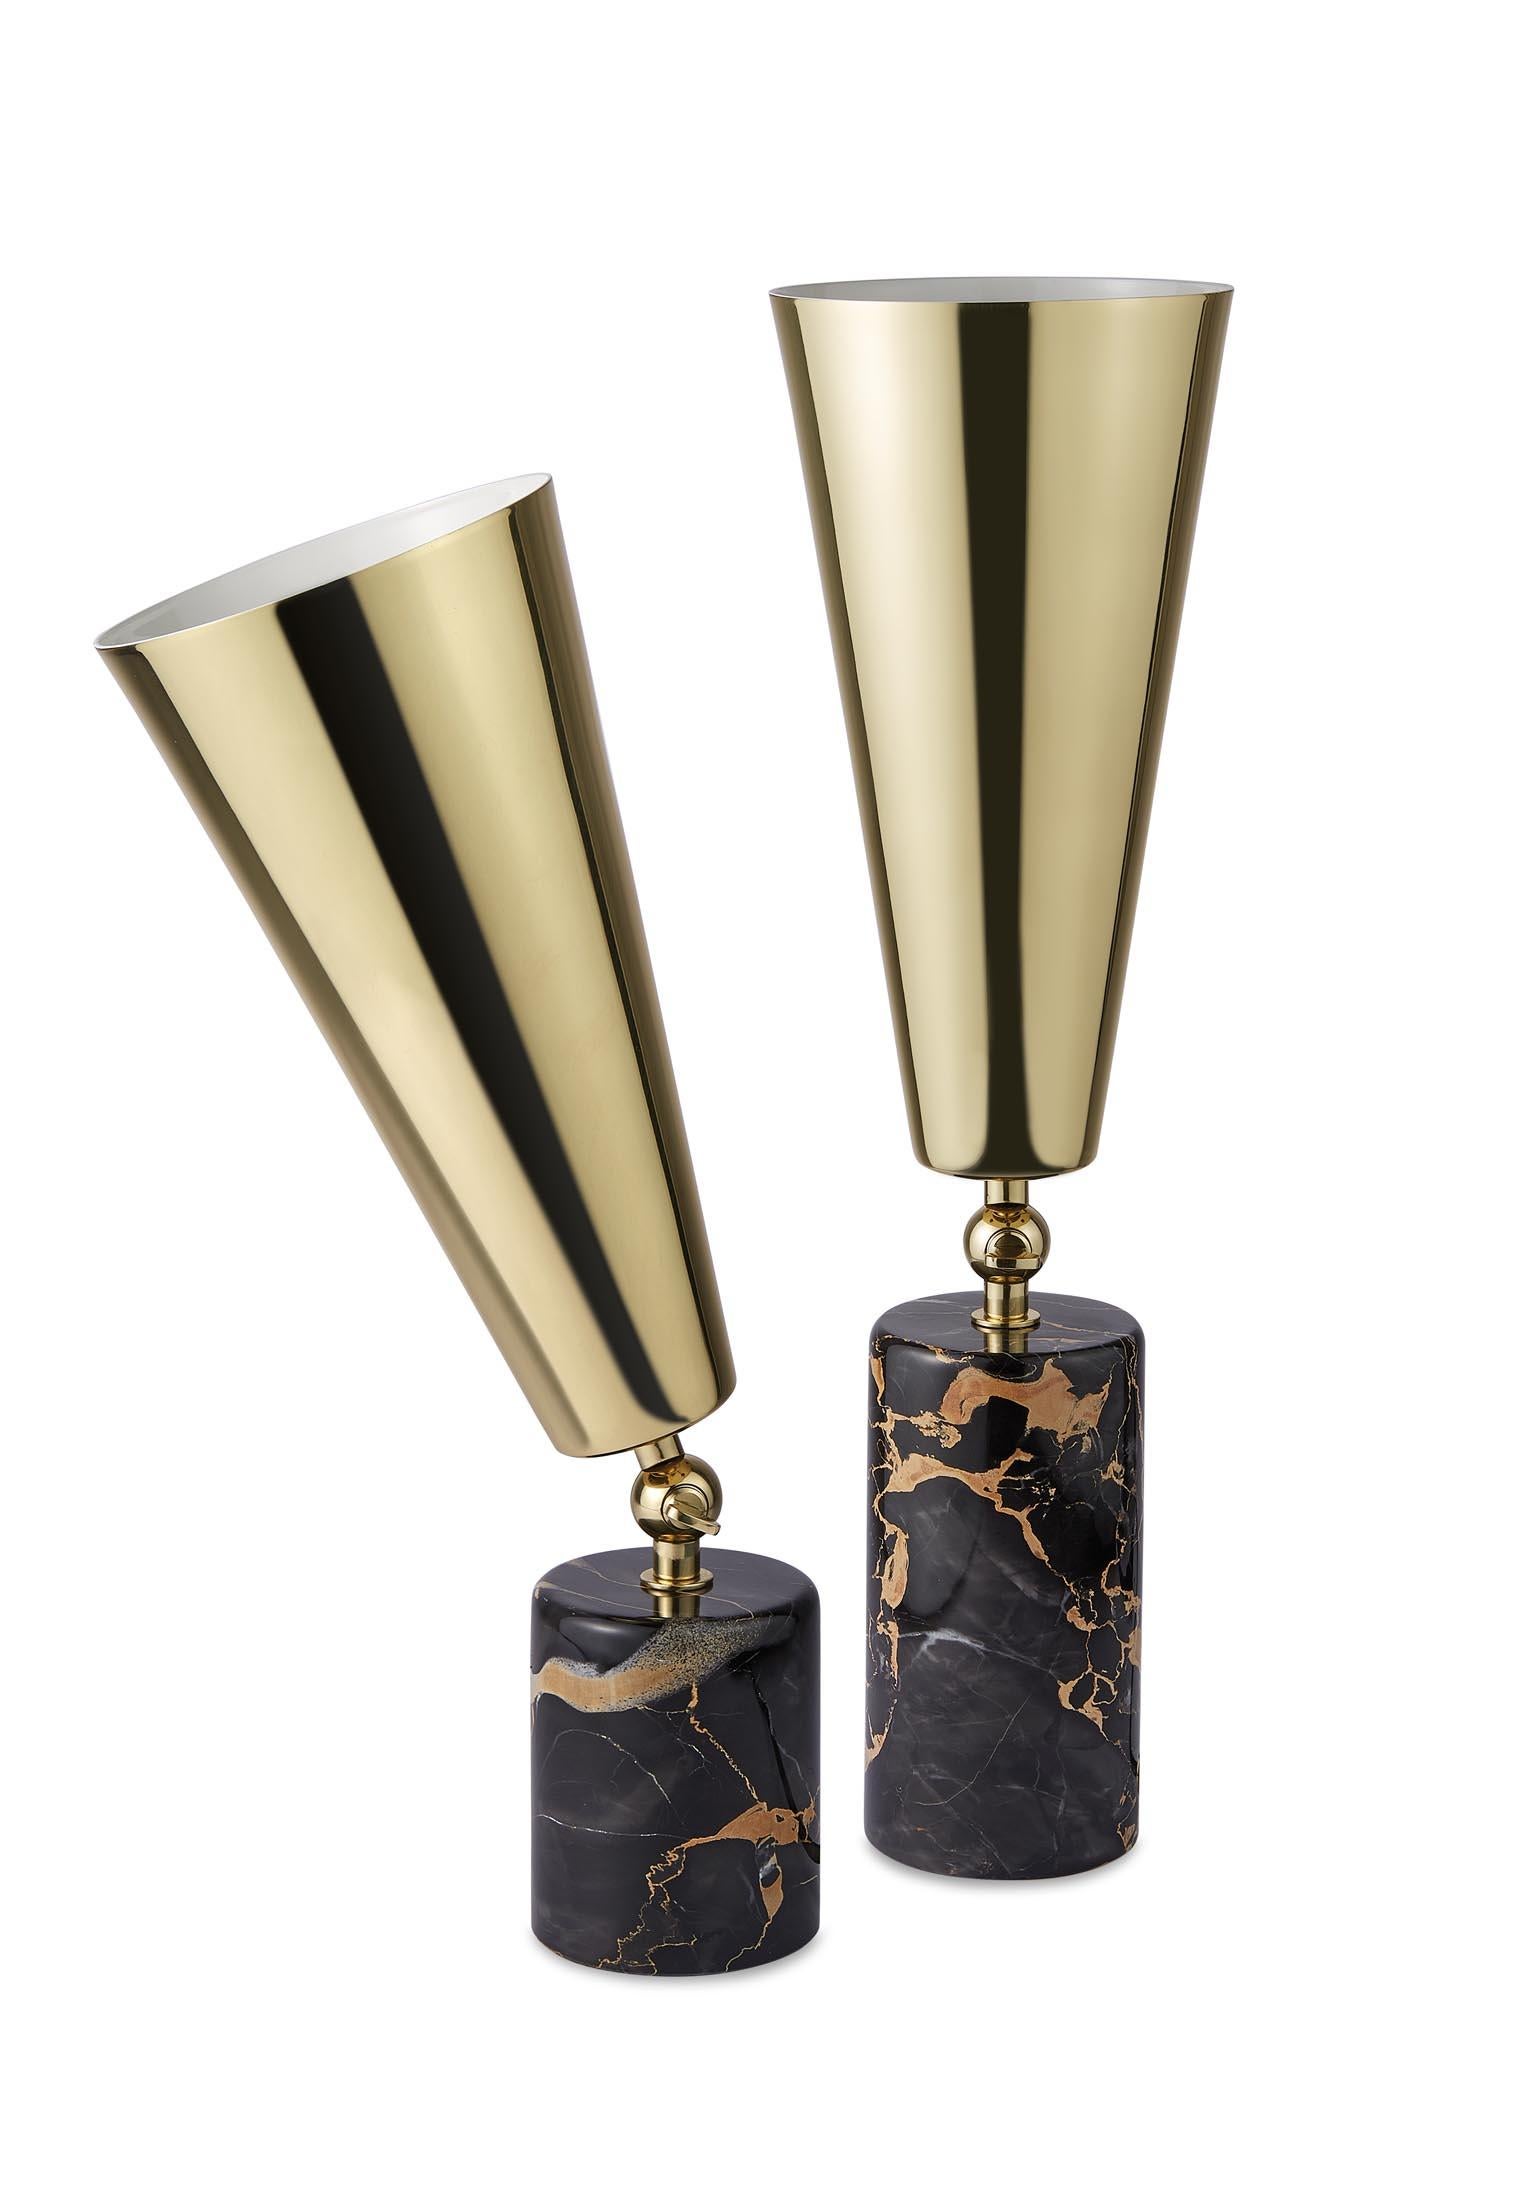 Tato Italia 'Vox' Table Lamp in White Carrara Marble and Satin Brass For Sale 5